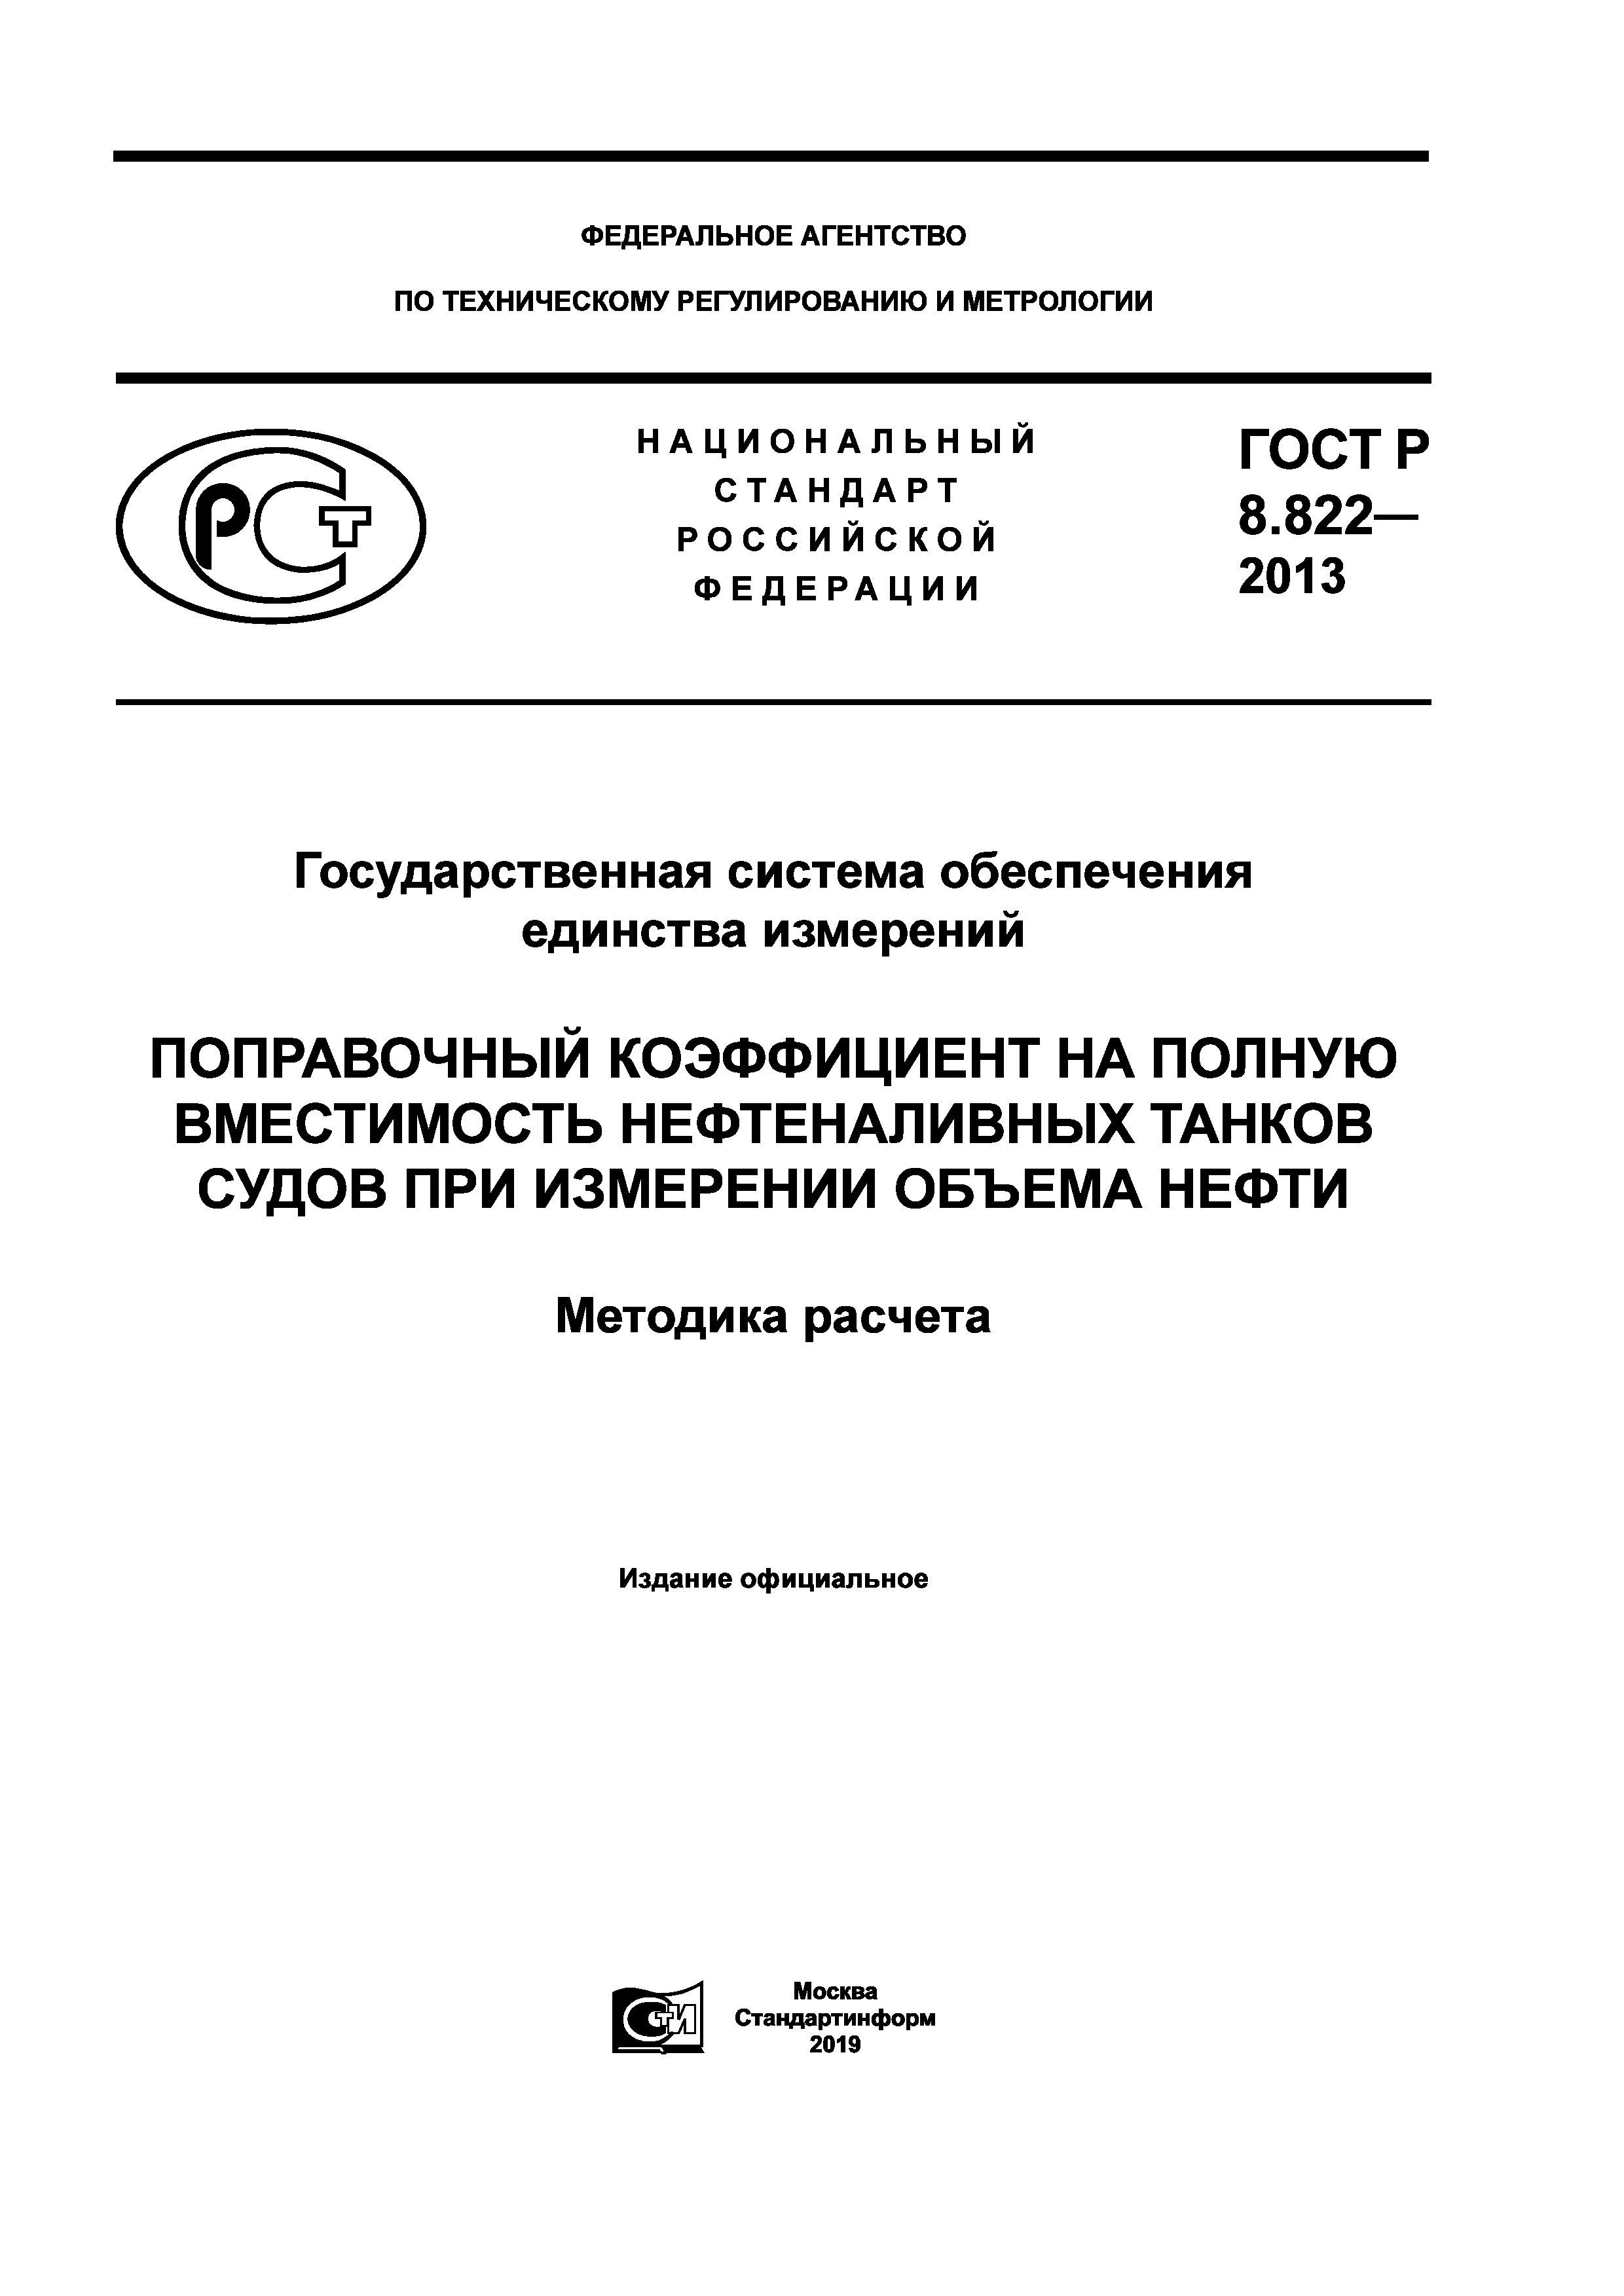 ГОСТ Р 8.822-2013